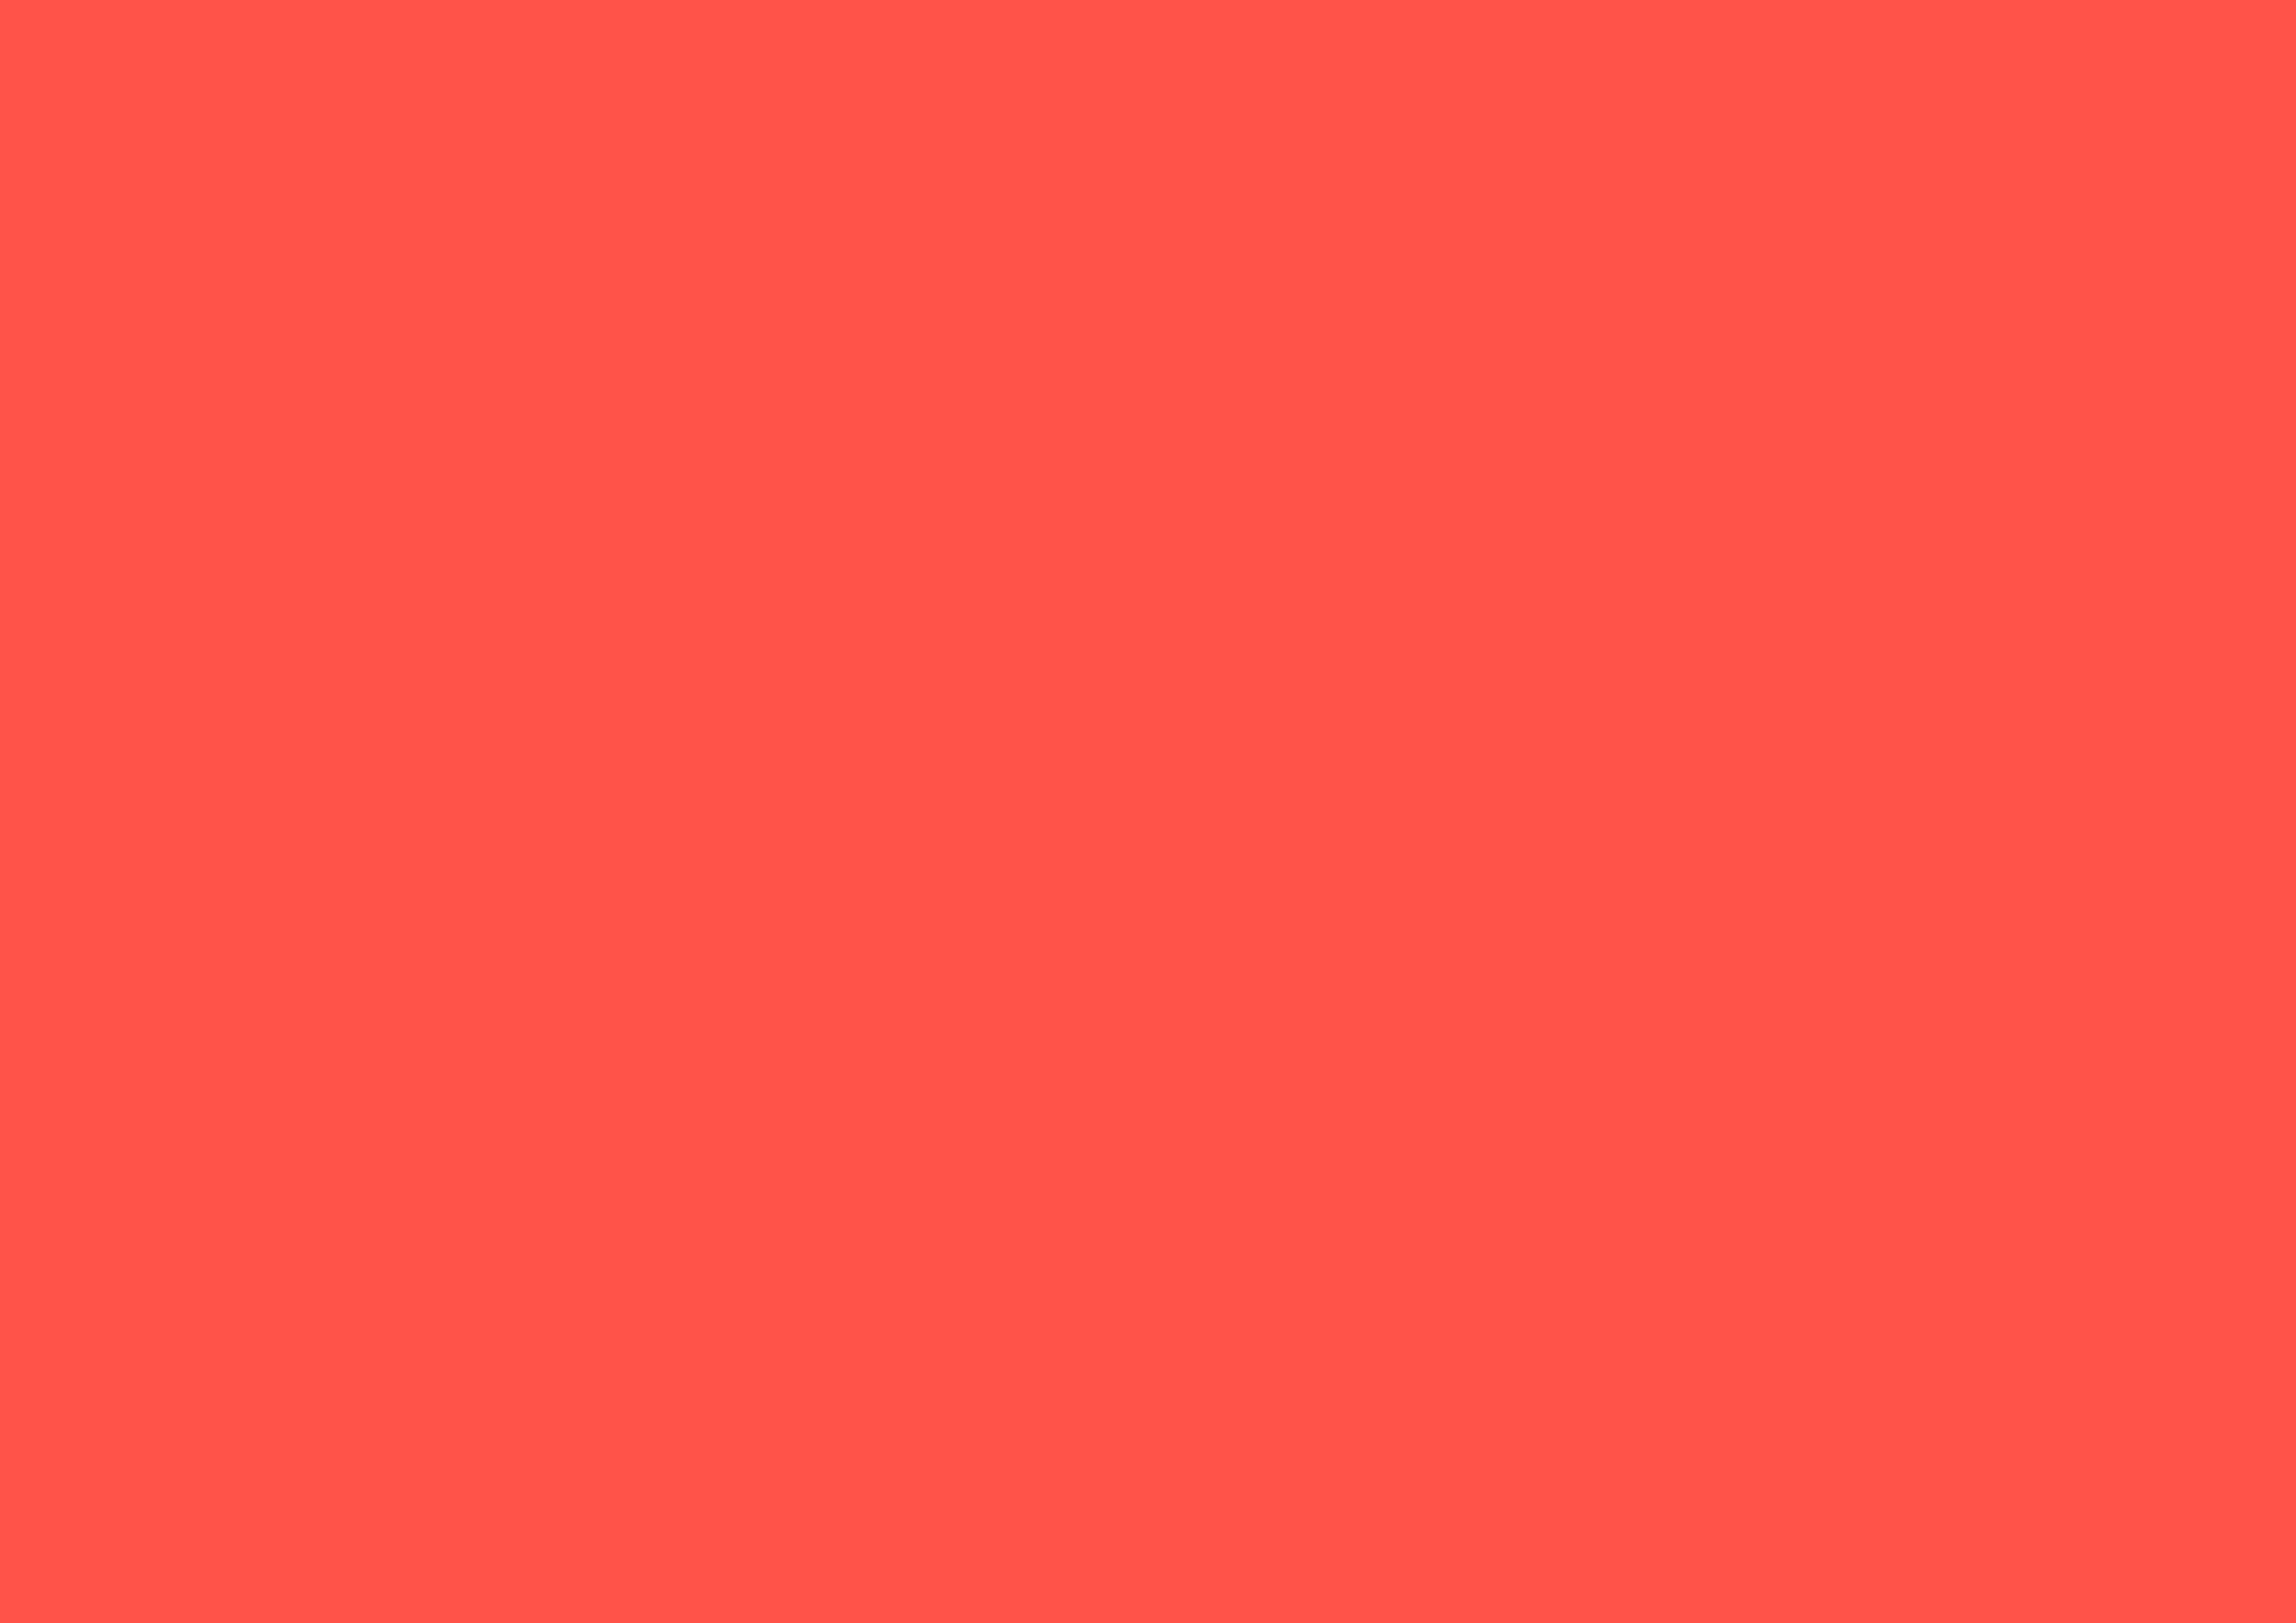 3508x2480 Red-orange Solid Color Background